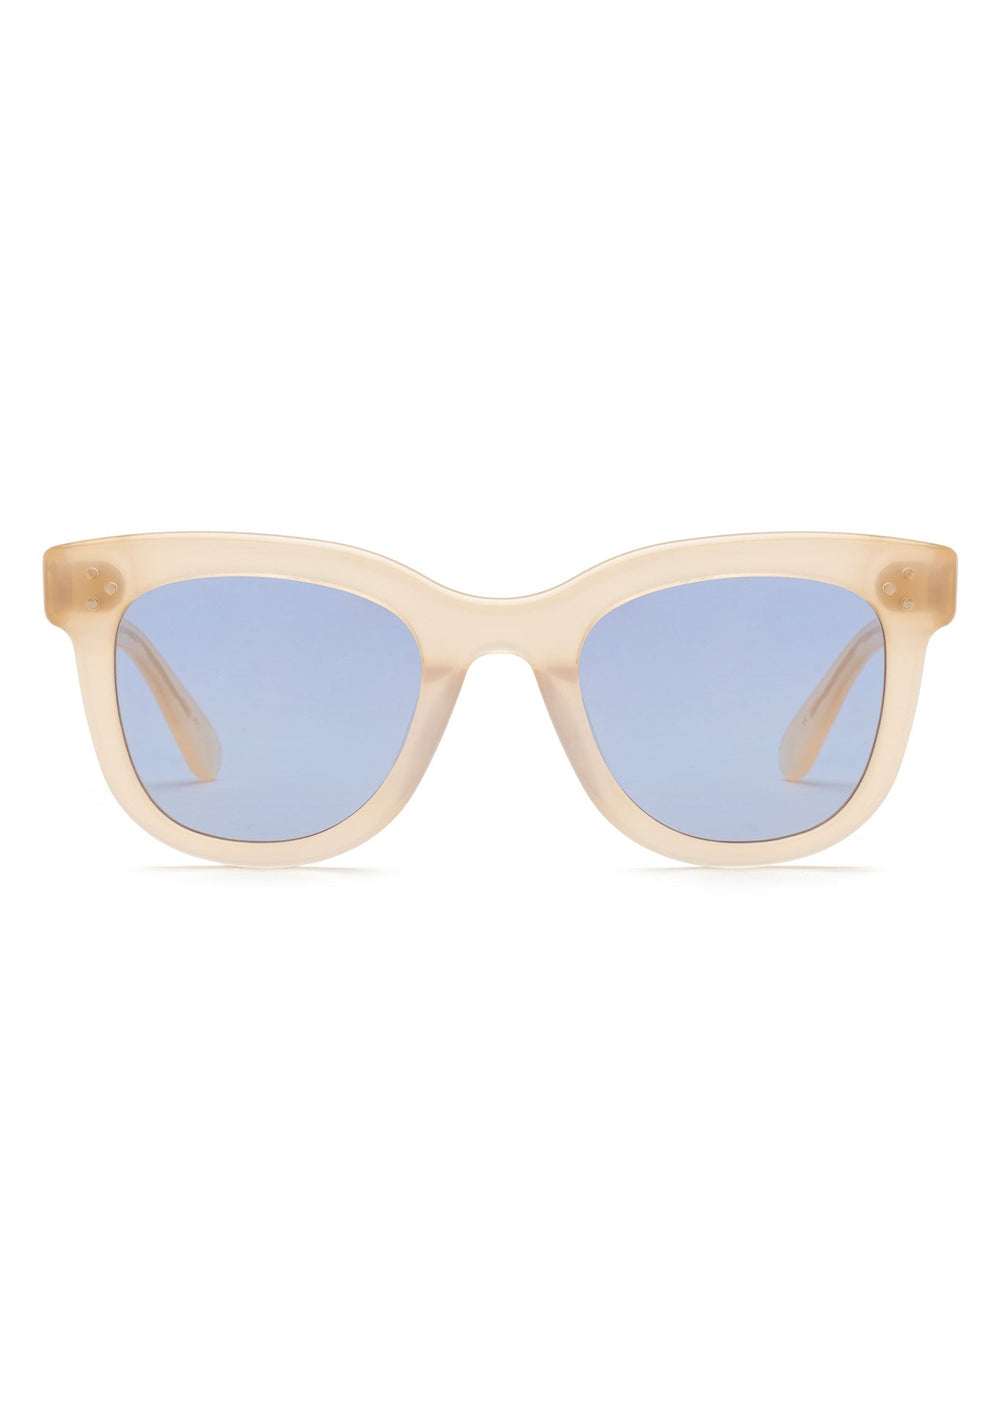 KREWE SUNGLASSES - JENA | Blonde + Custom Vanity Tint handcrafted, luxury blonde oversized sunglasses with custom blue tinted lenses 